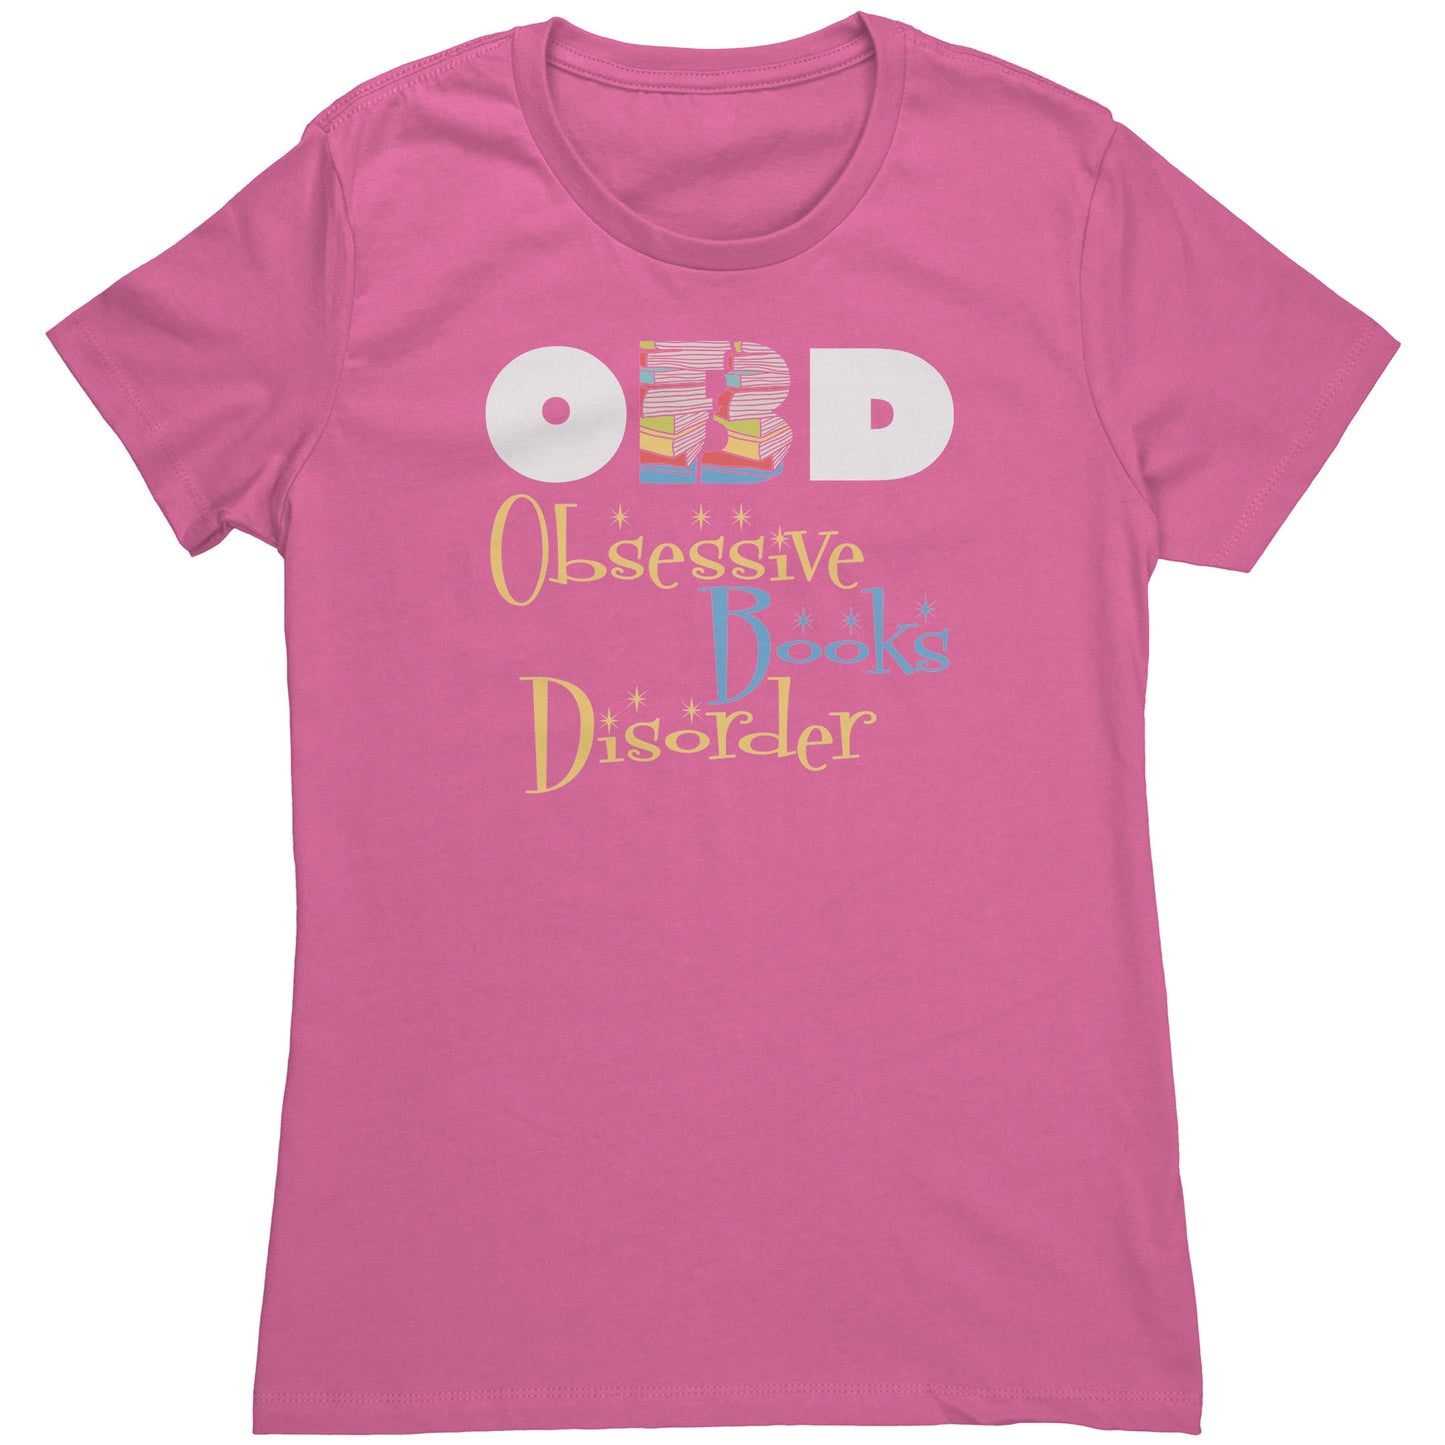 OBD Obsessive Books Disorder | Women's T-Shirt